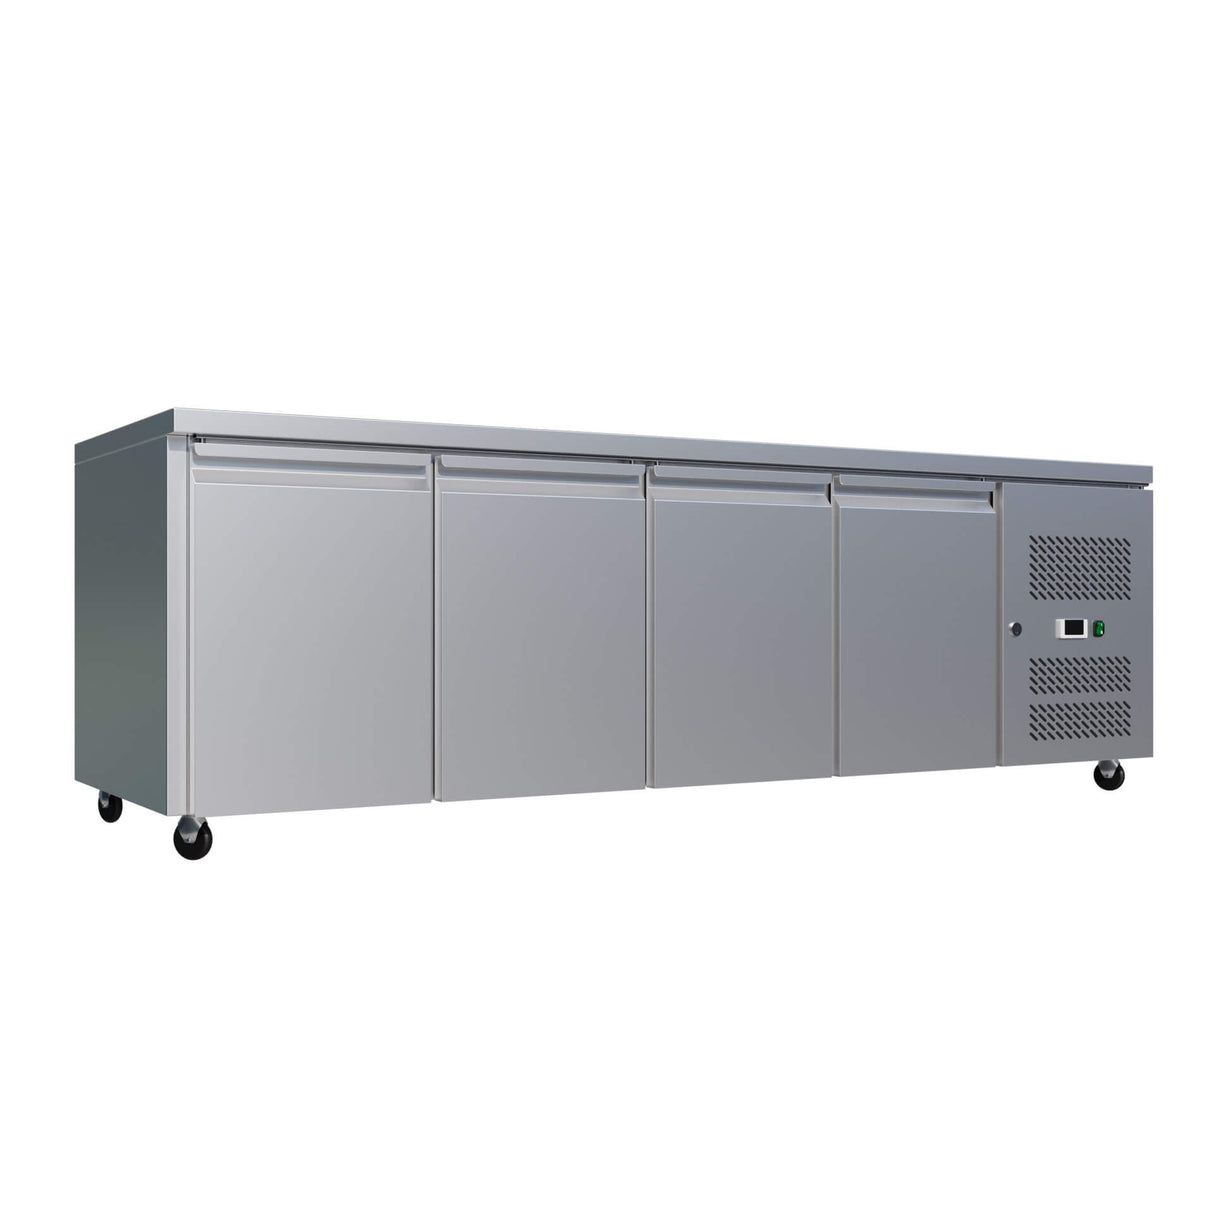 Empire Stainless Steel Four Door Counter Refrigerator - GN4100TN Refrigerated Counters - Four Door Empire   